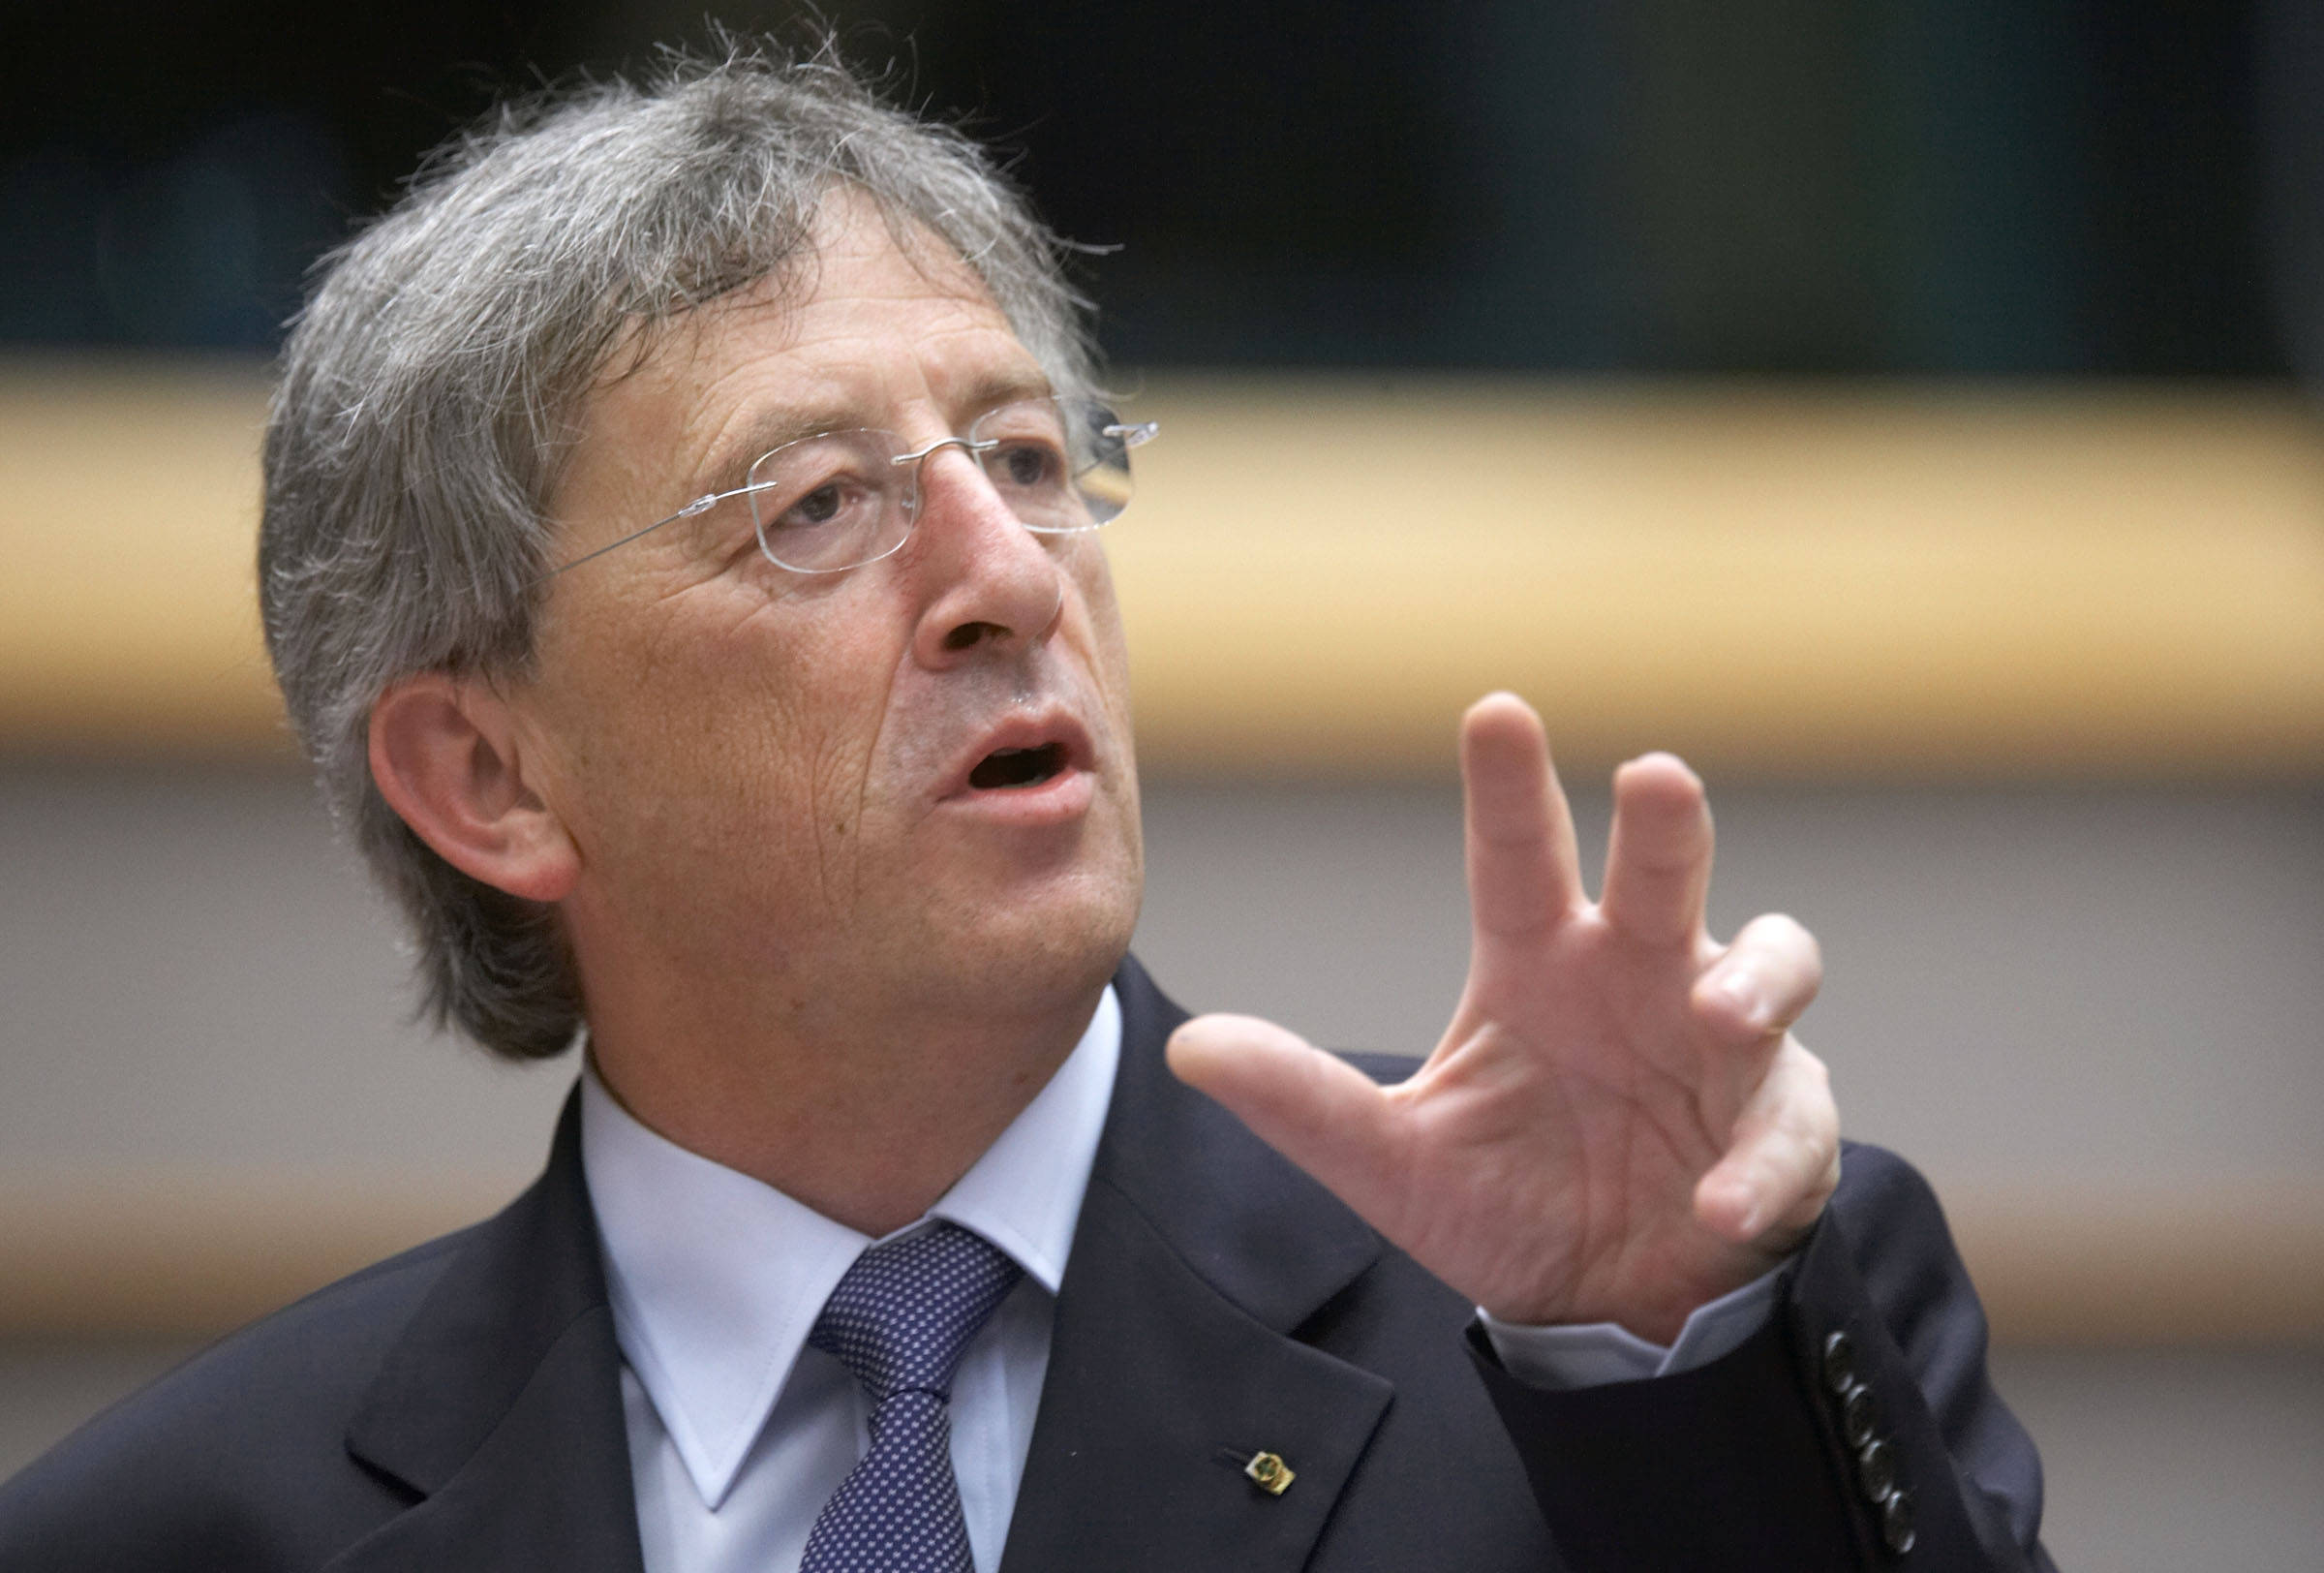 EU leaders to approve economic stimulus, Juncker says 